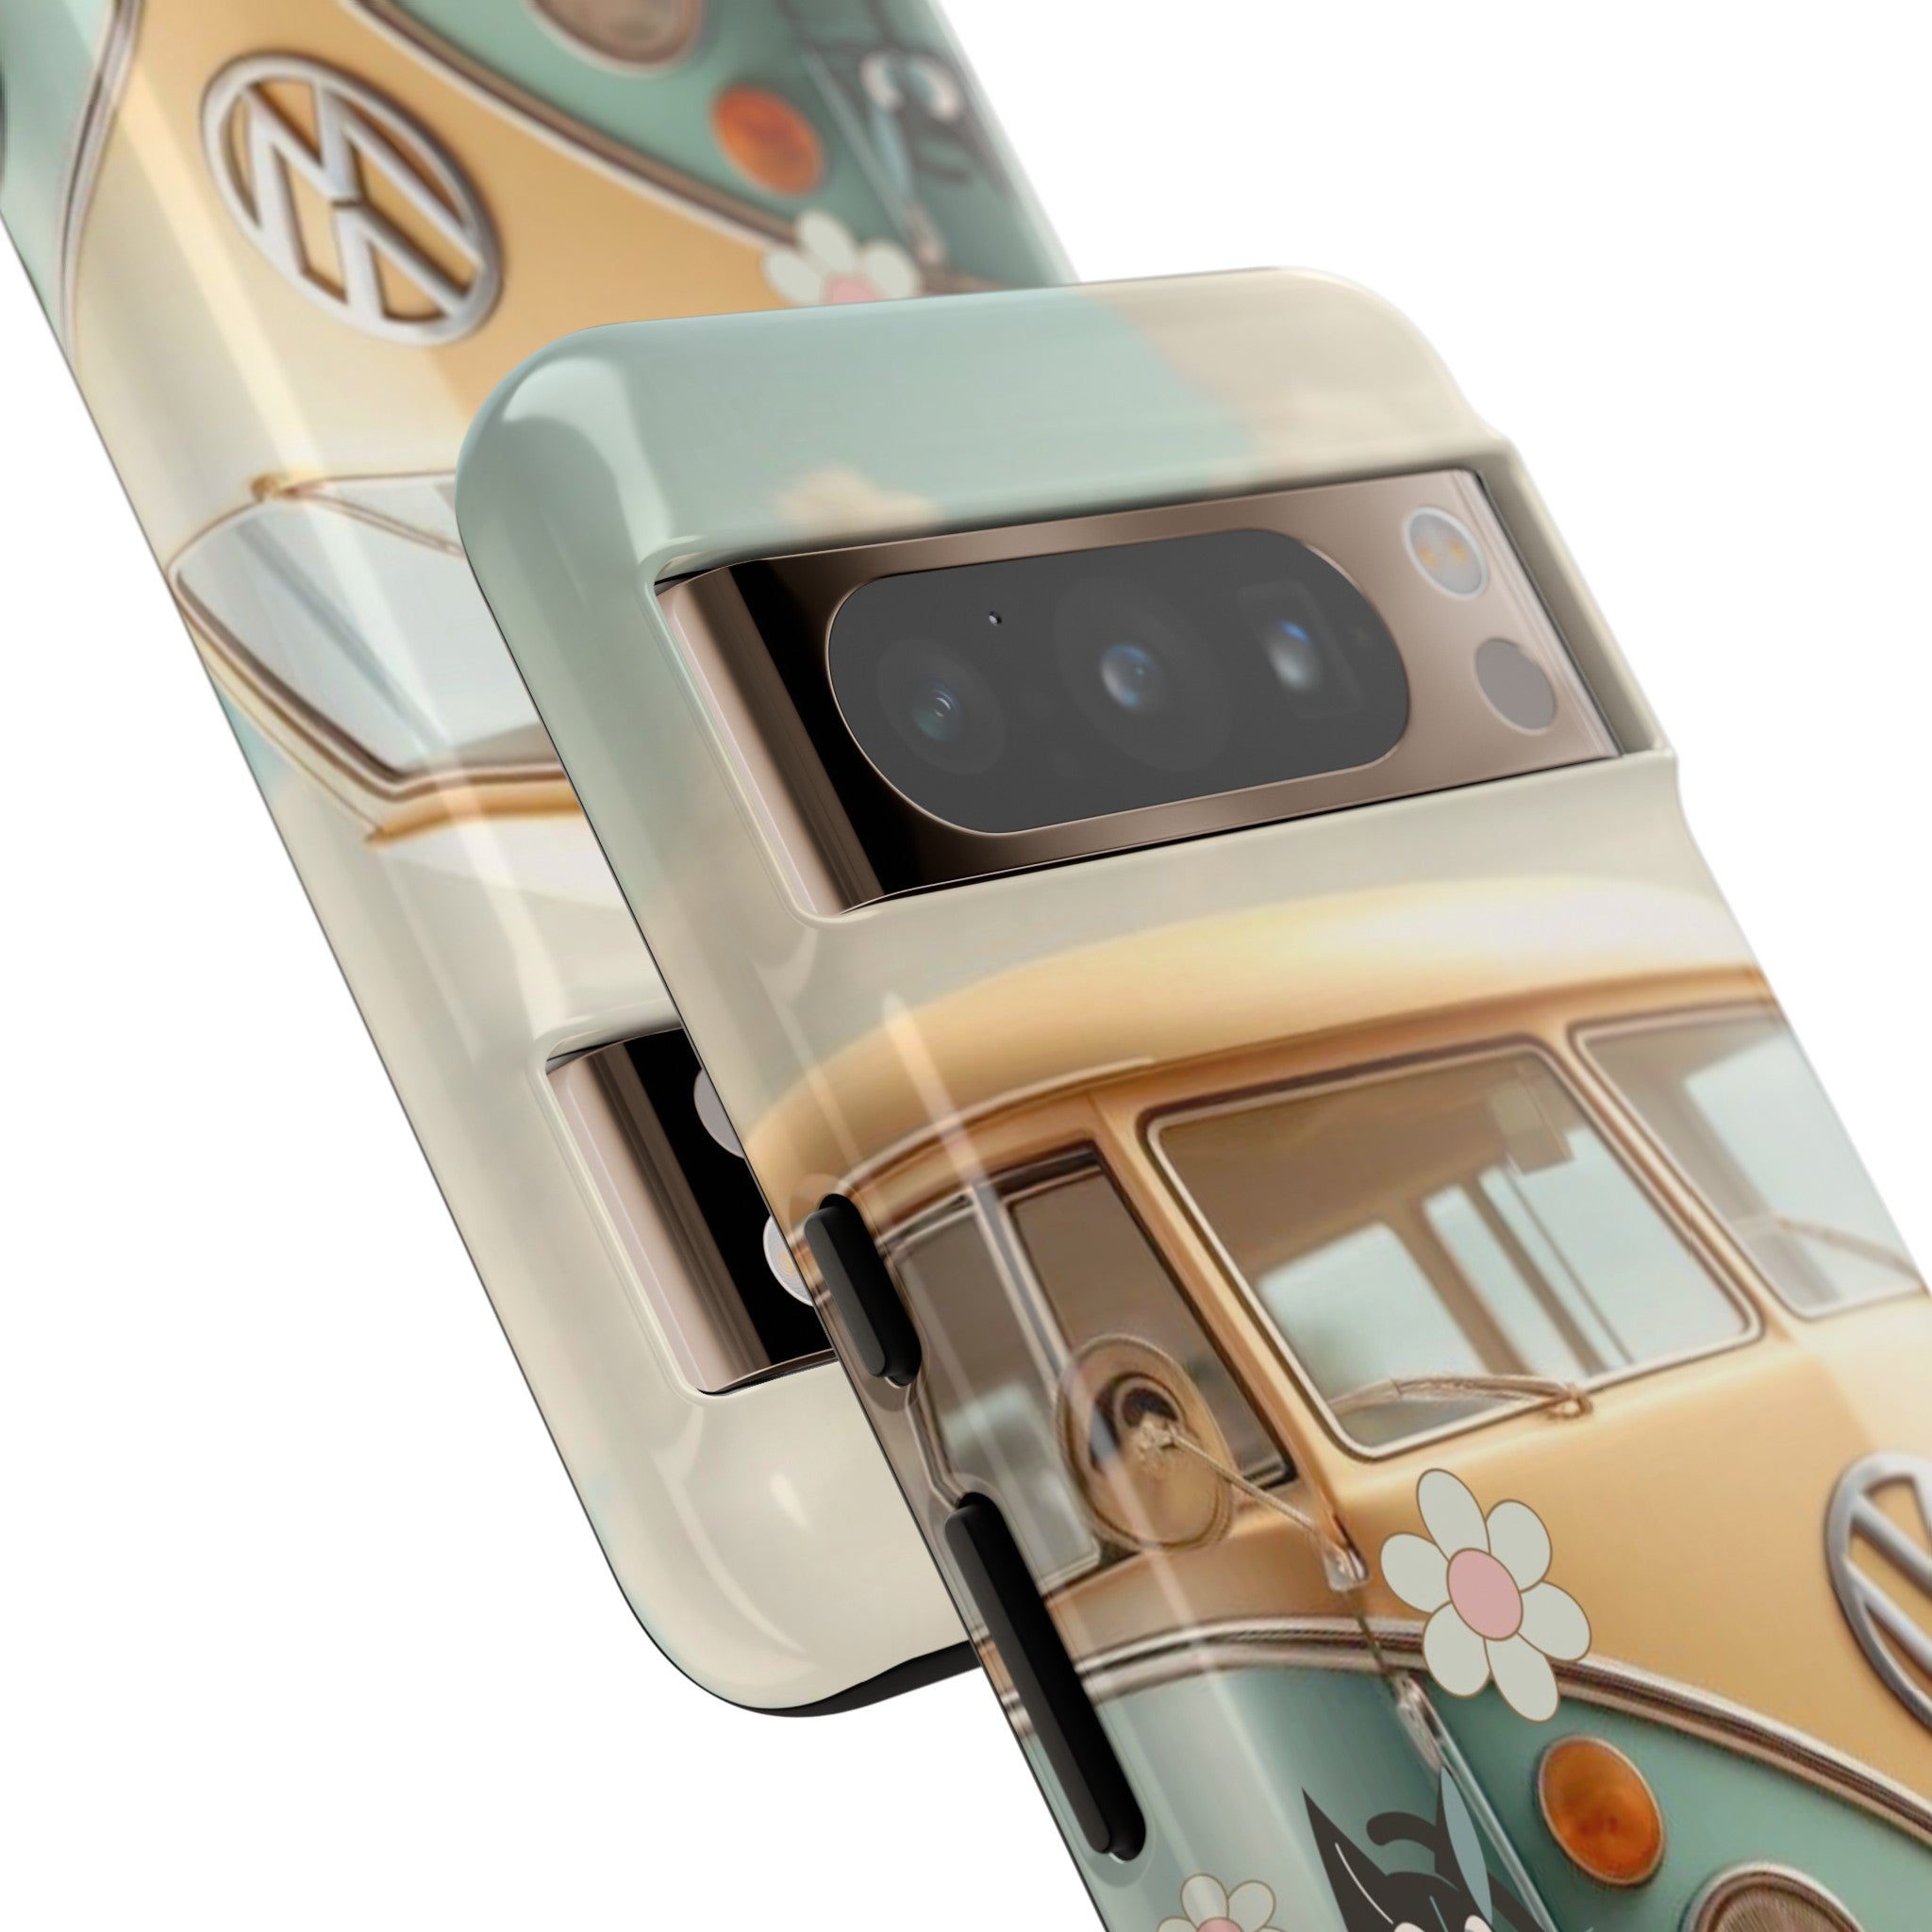 70s Hippie Bus, Retro Atomic Cat, Flower Power Smart Phone Tough Cases